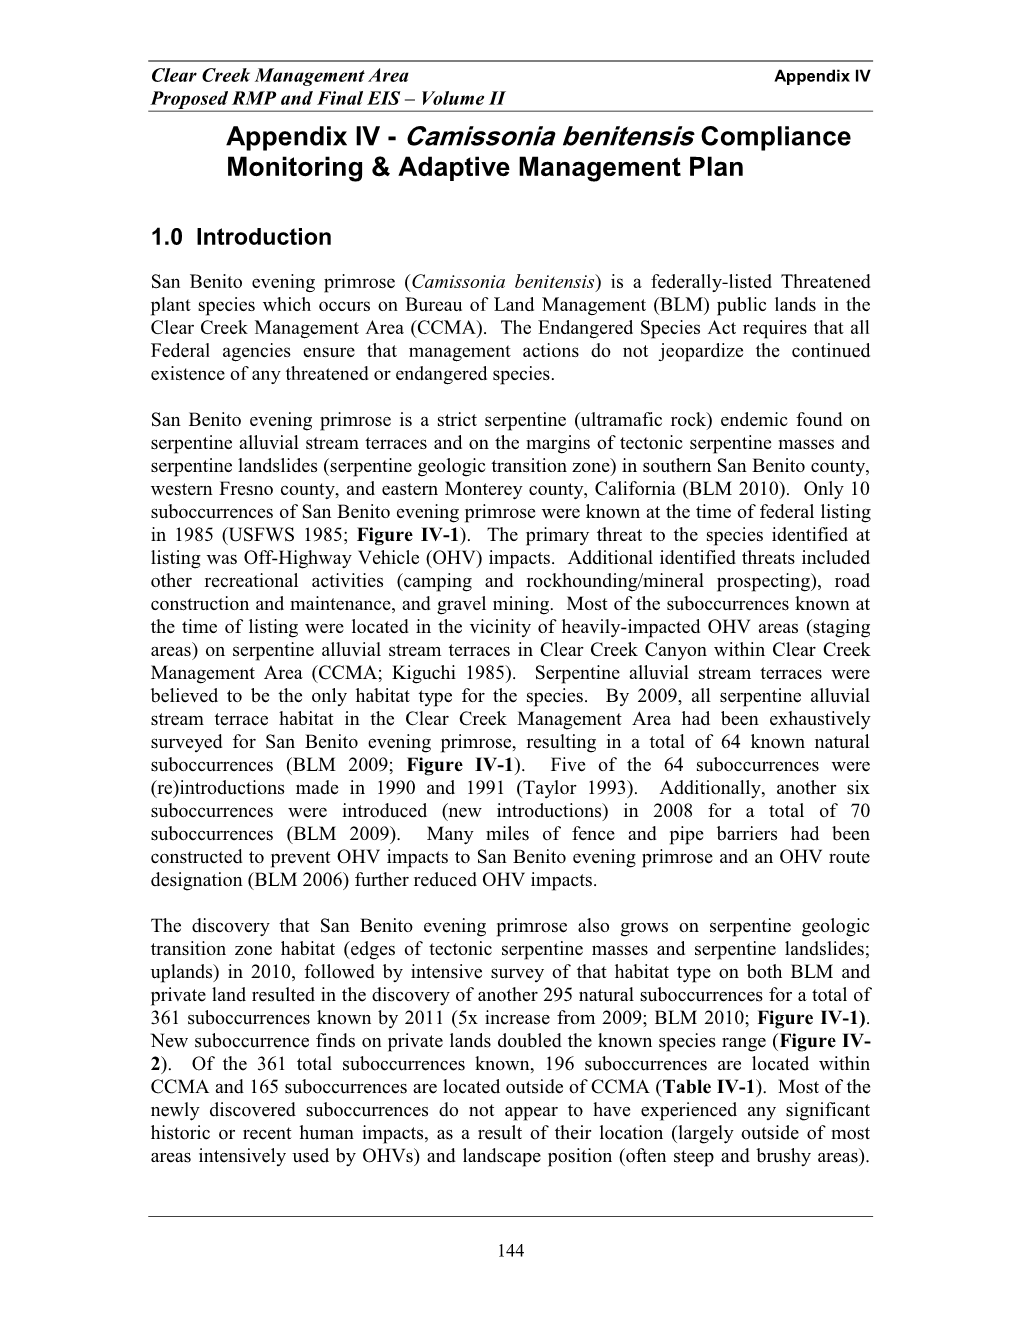 Camissonia Benitensis Compliance Monitoring & Adaptive Management Plan